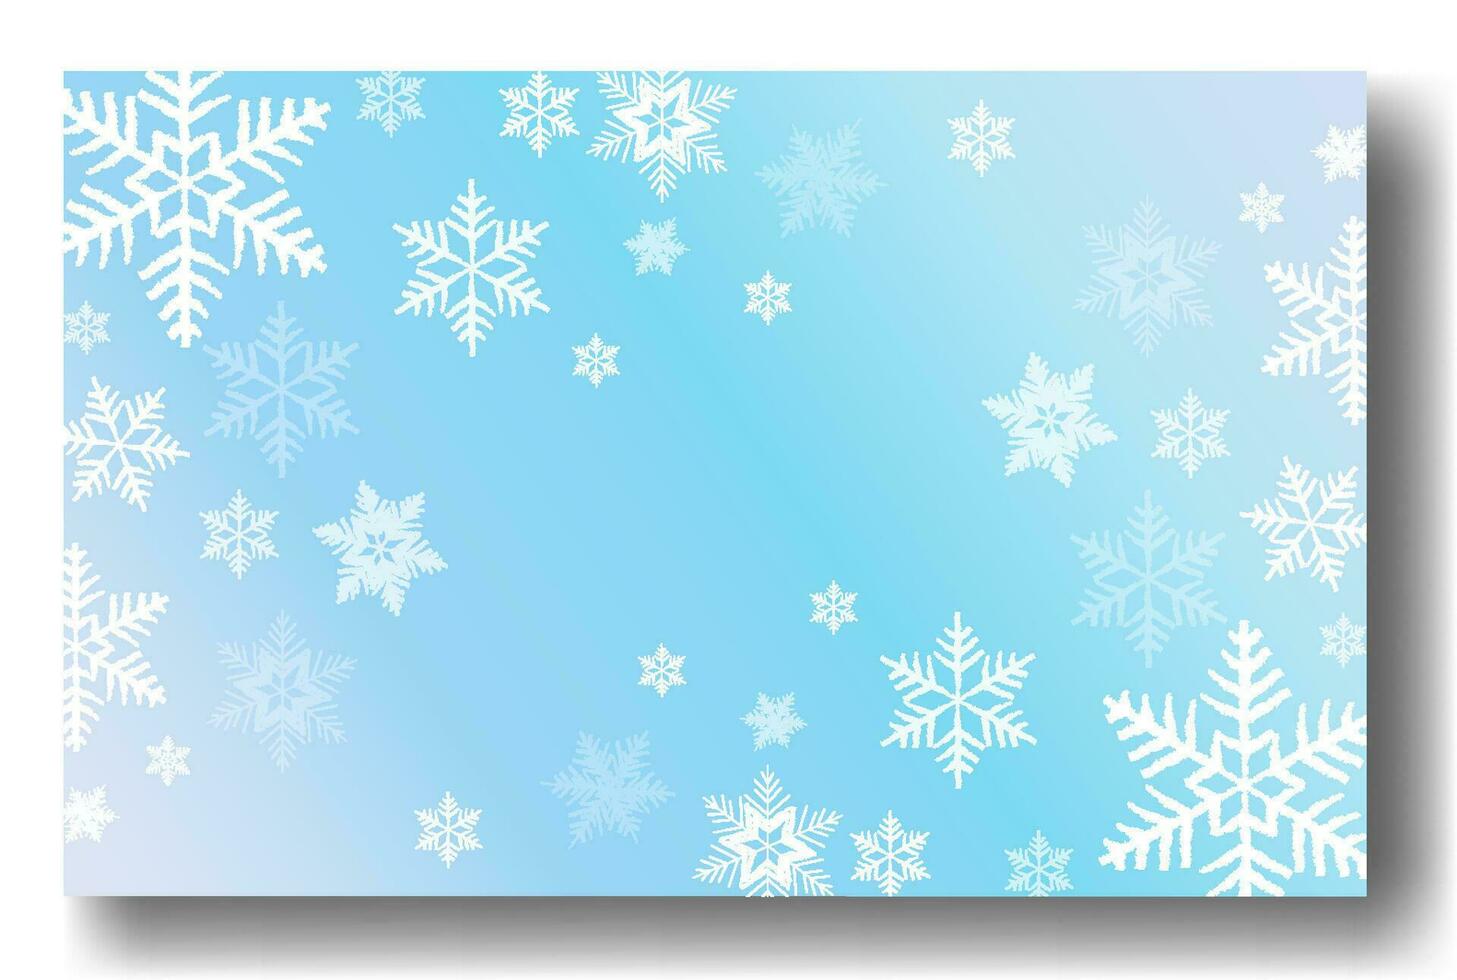 Cute falling snow flakes illustration. Wintertime speck frozen granules. Snowfall sky white teal blue wallpaper. Scattered snowflakes december theme. Snow hurricane landscape vector